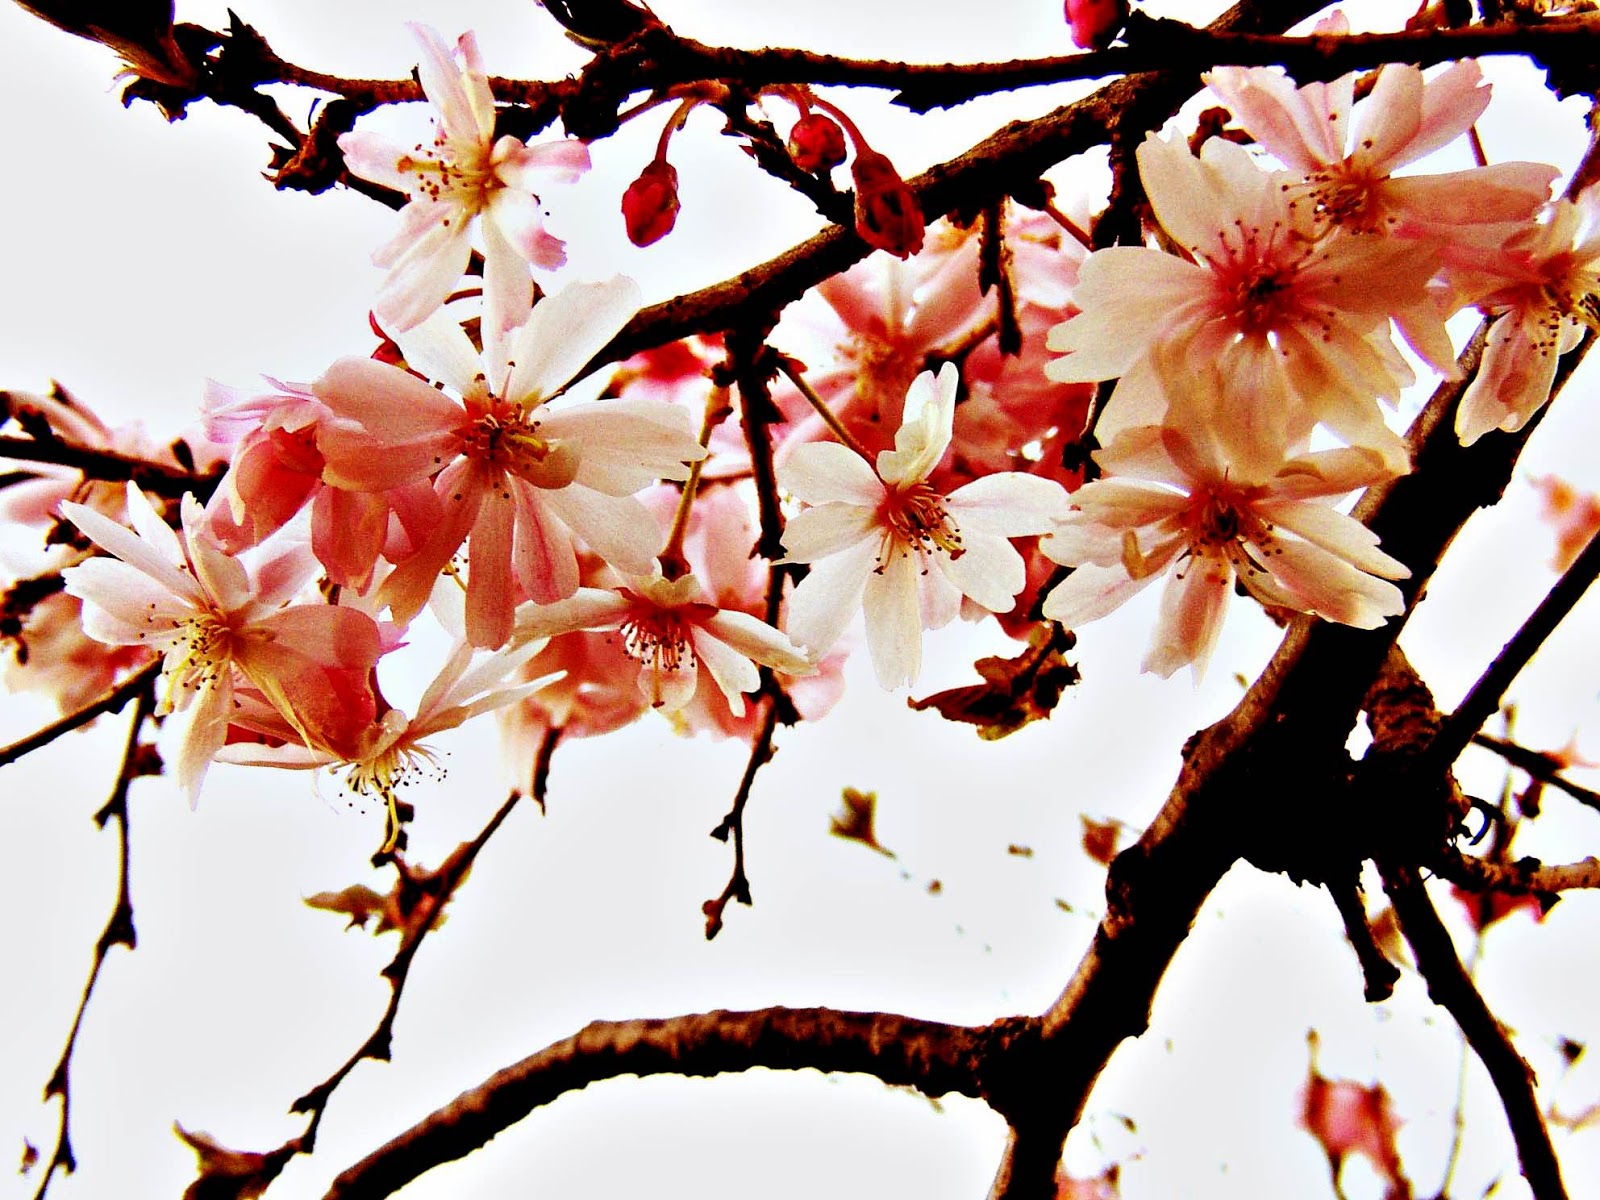 Koleksi Dp Bbm Bergerak Bunga Sakura | Kumpulan Gambar ...